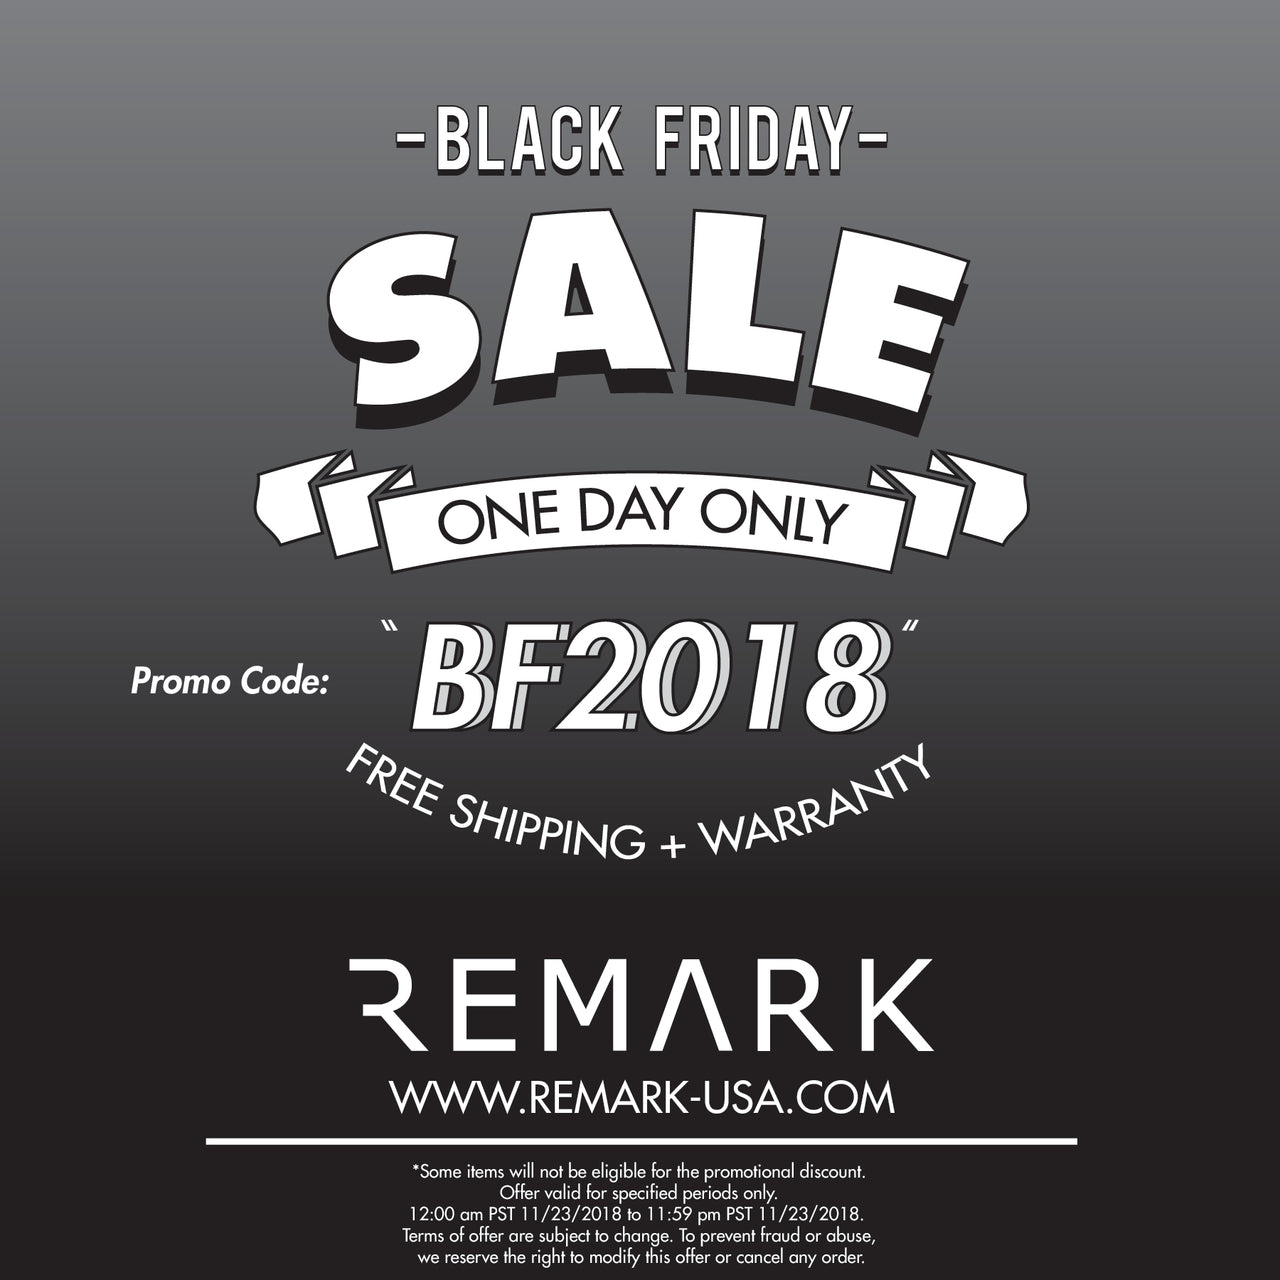 REMARK BLACK FRIDAY SALE 2018!!!